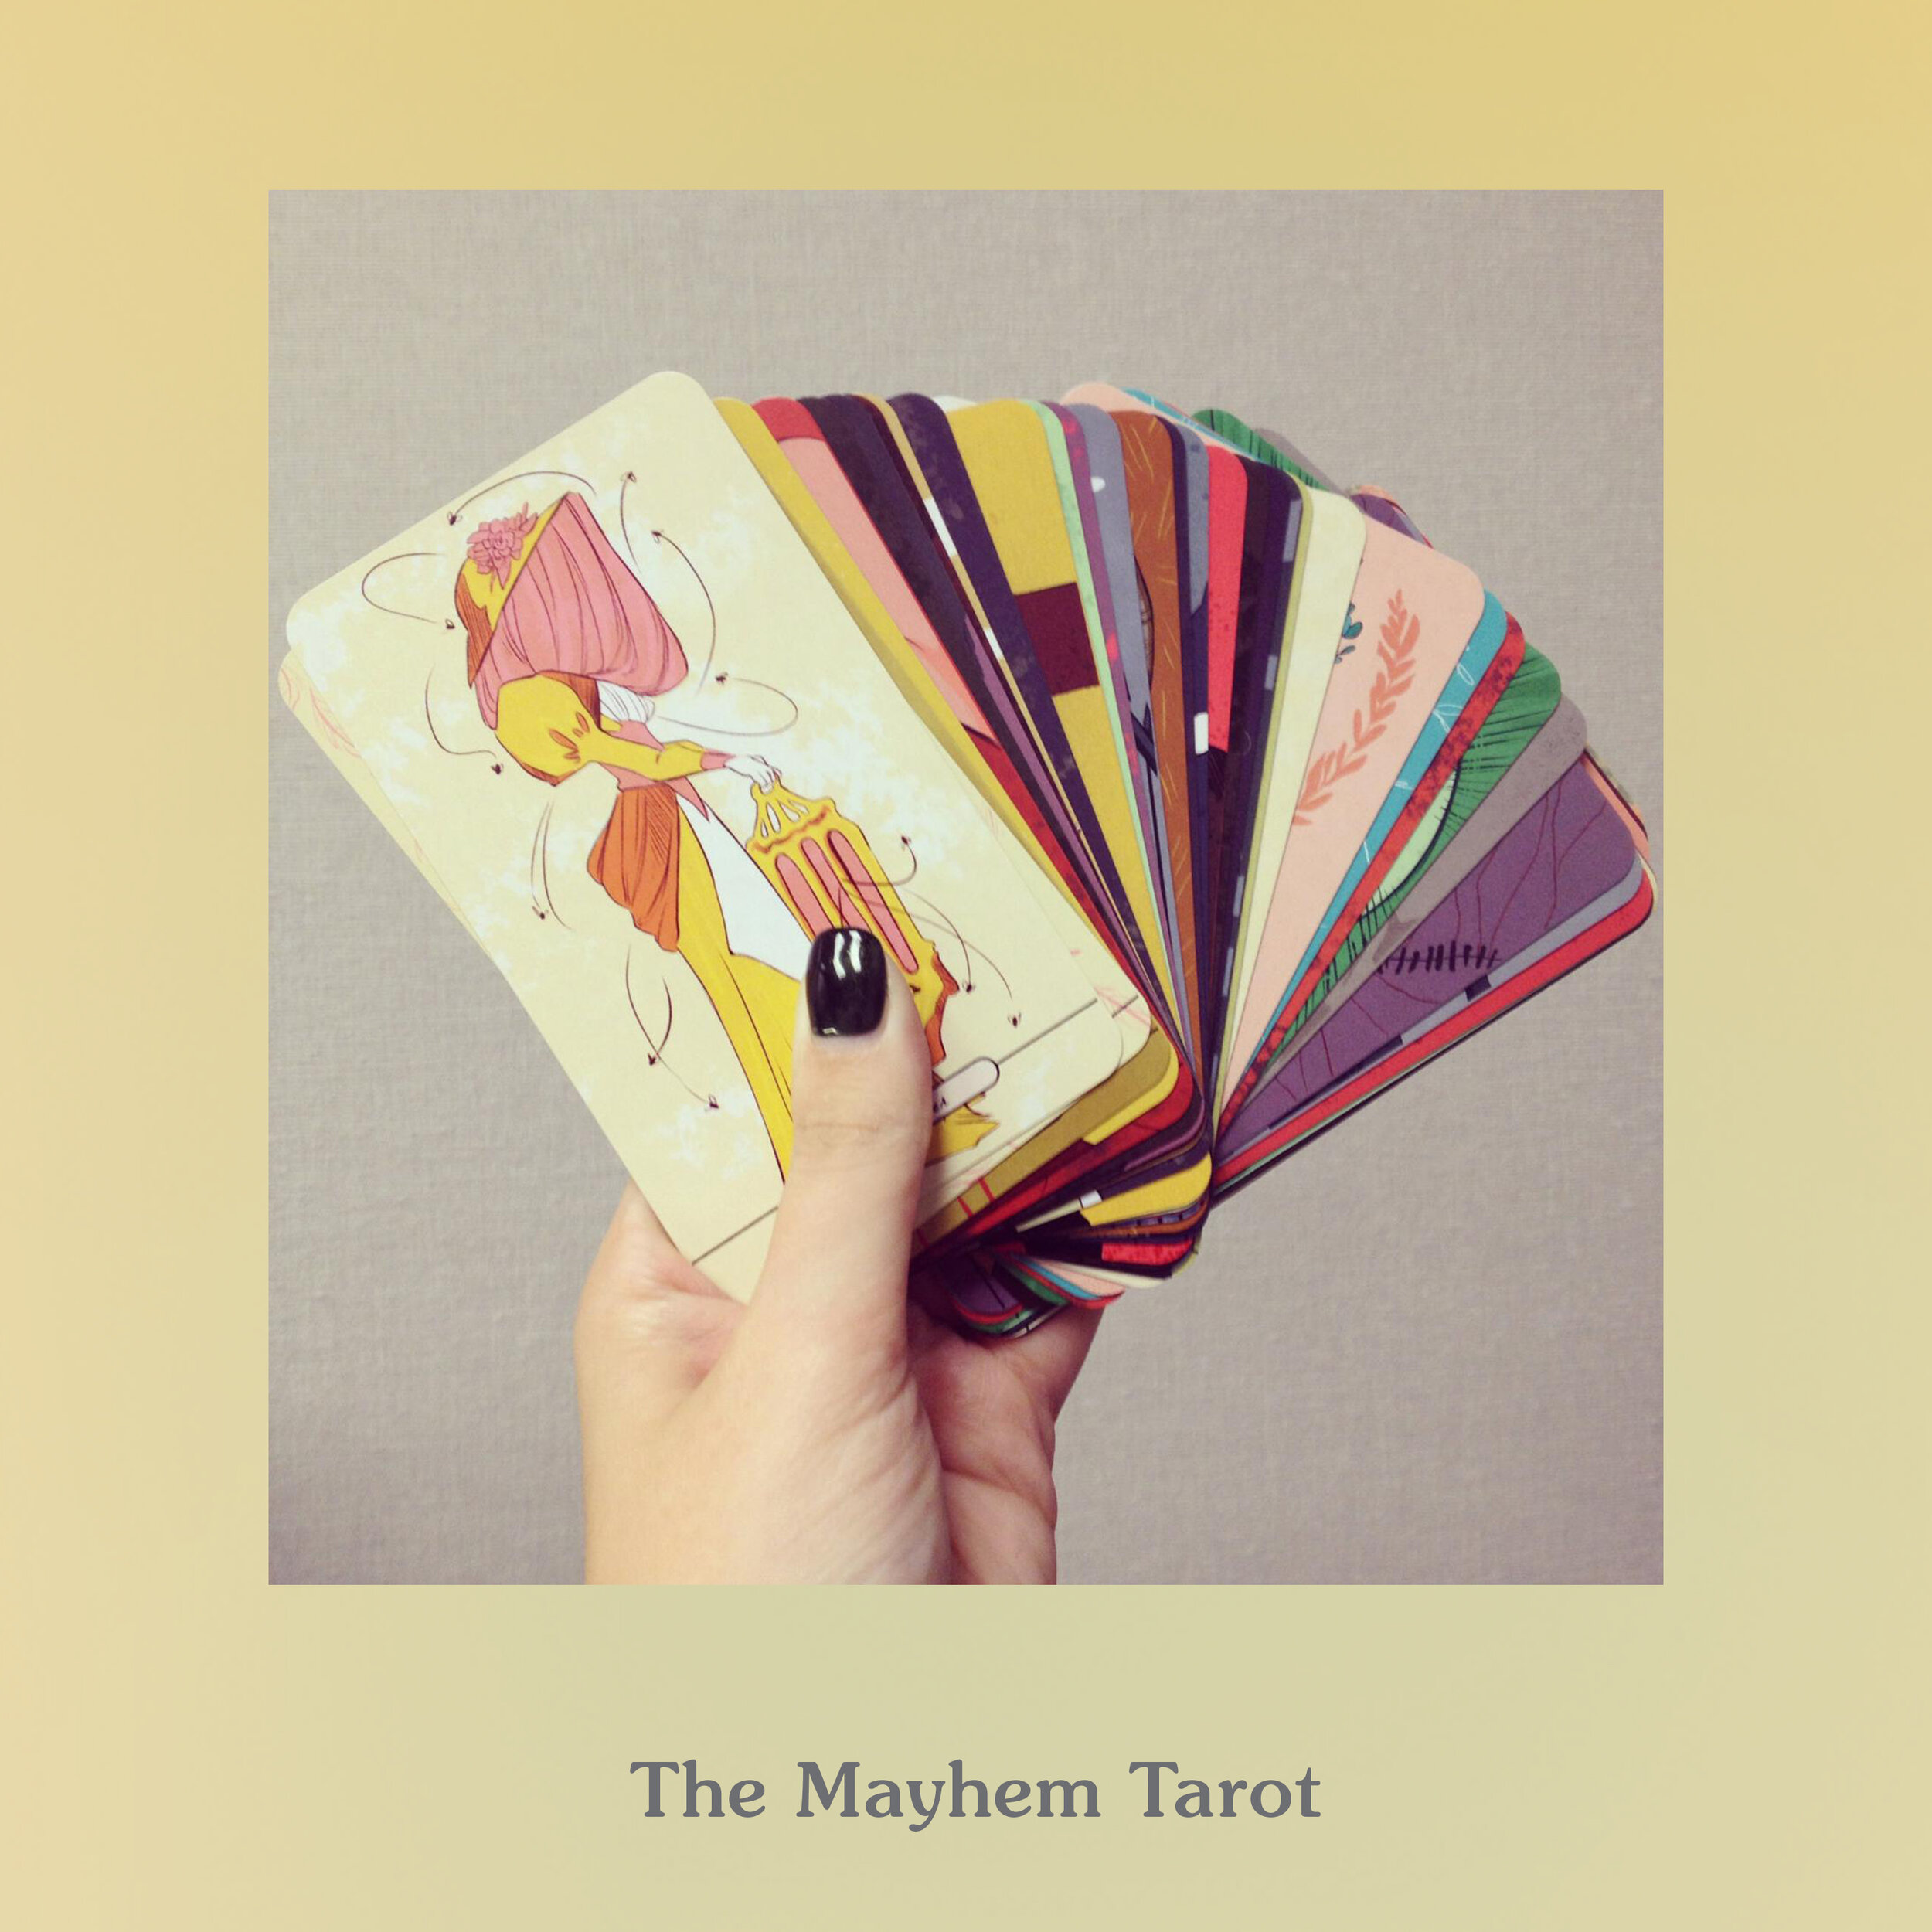 The Mayhem Tarot